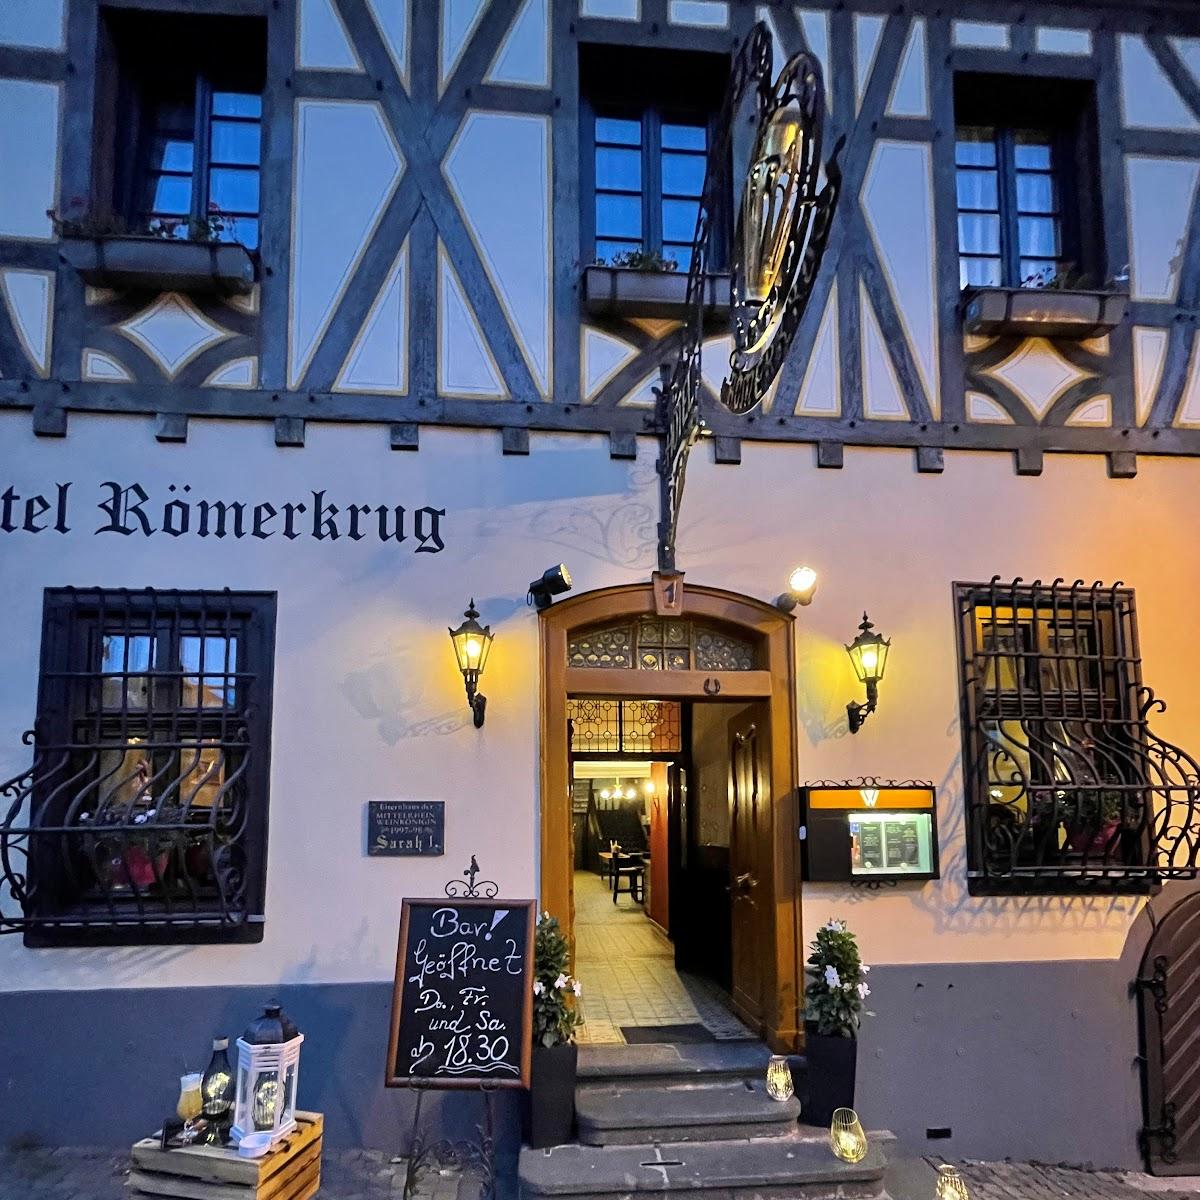 Restaurant "Hotel Römerkrug" in Oberwesel